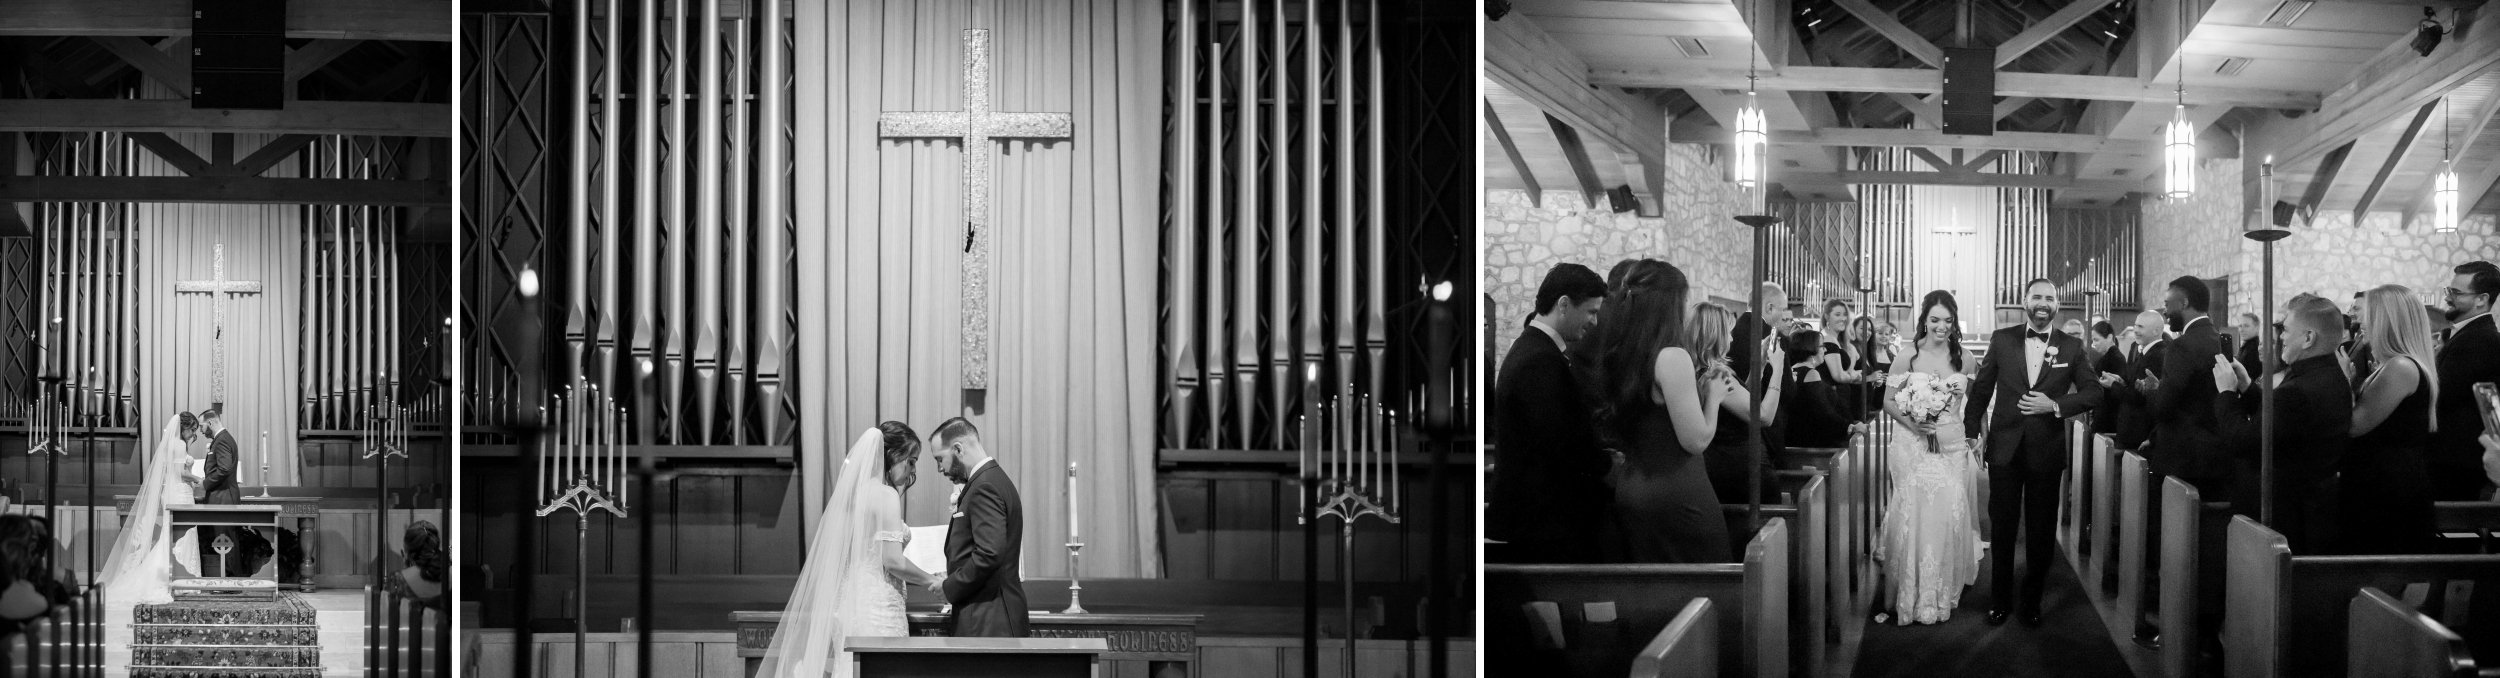 Wedding at Plymouth Congregational Church - Miami Wedding Photographers - Santy Martinez 18.jpg